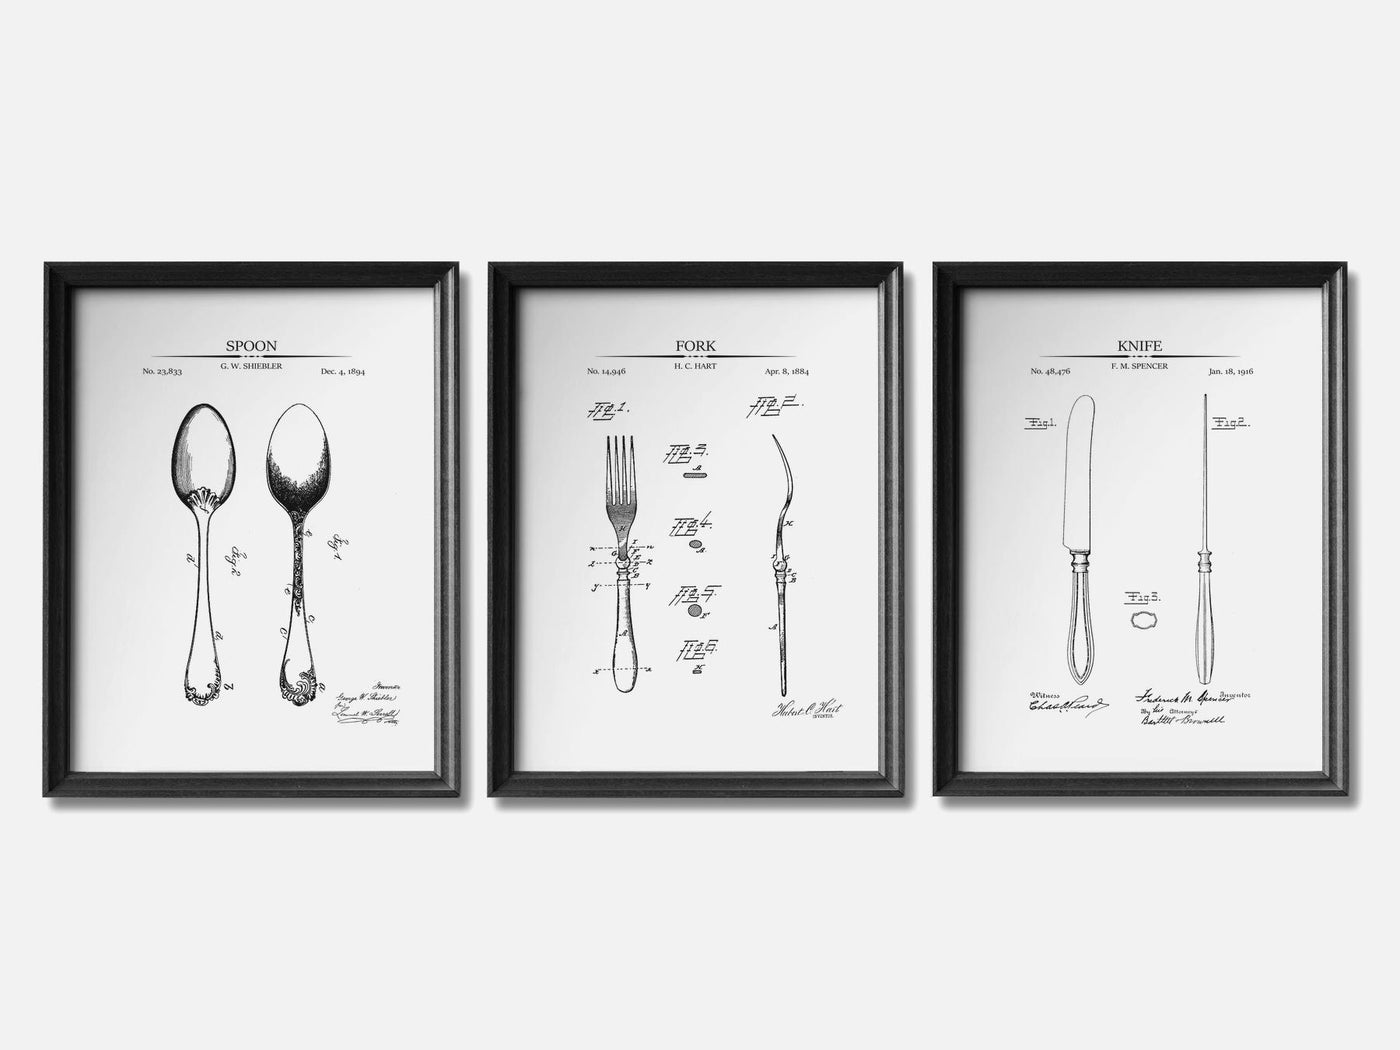 Dining Room Patent Print Set of 3 mockup - A_t10021-V1-PC_F+B-SS_3-PS_11x14-C_whi variant